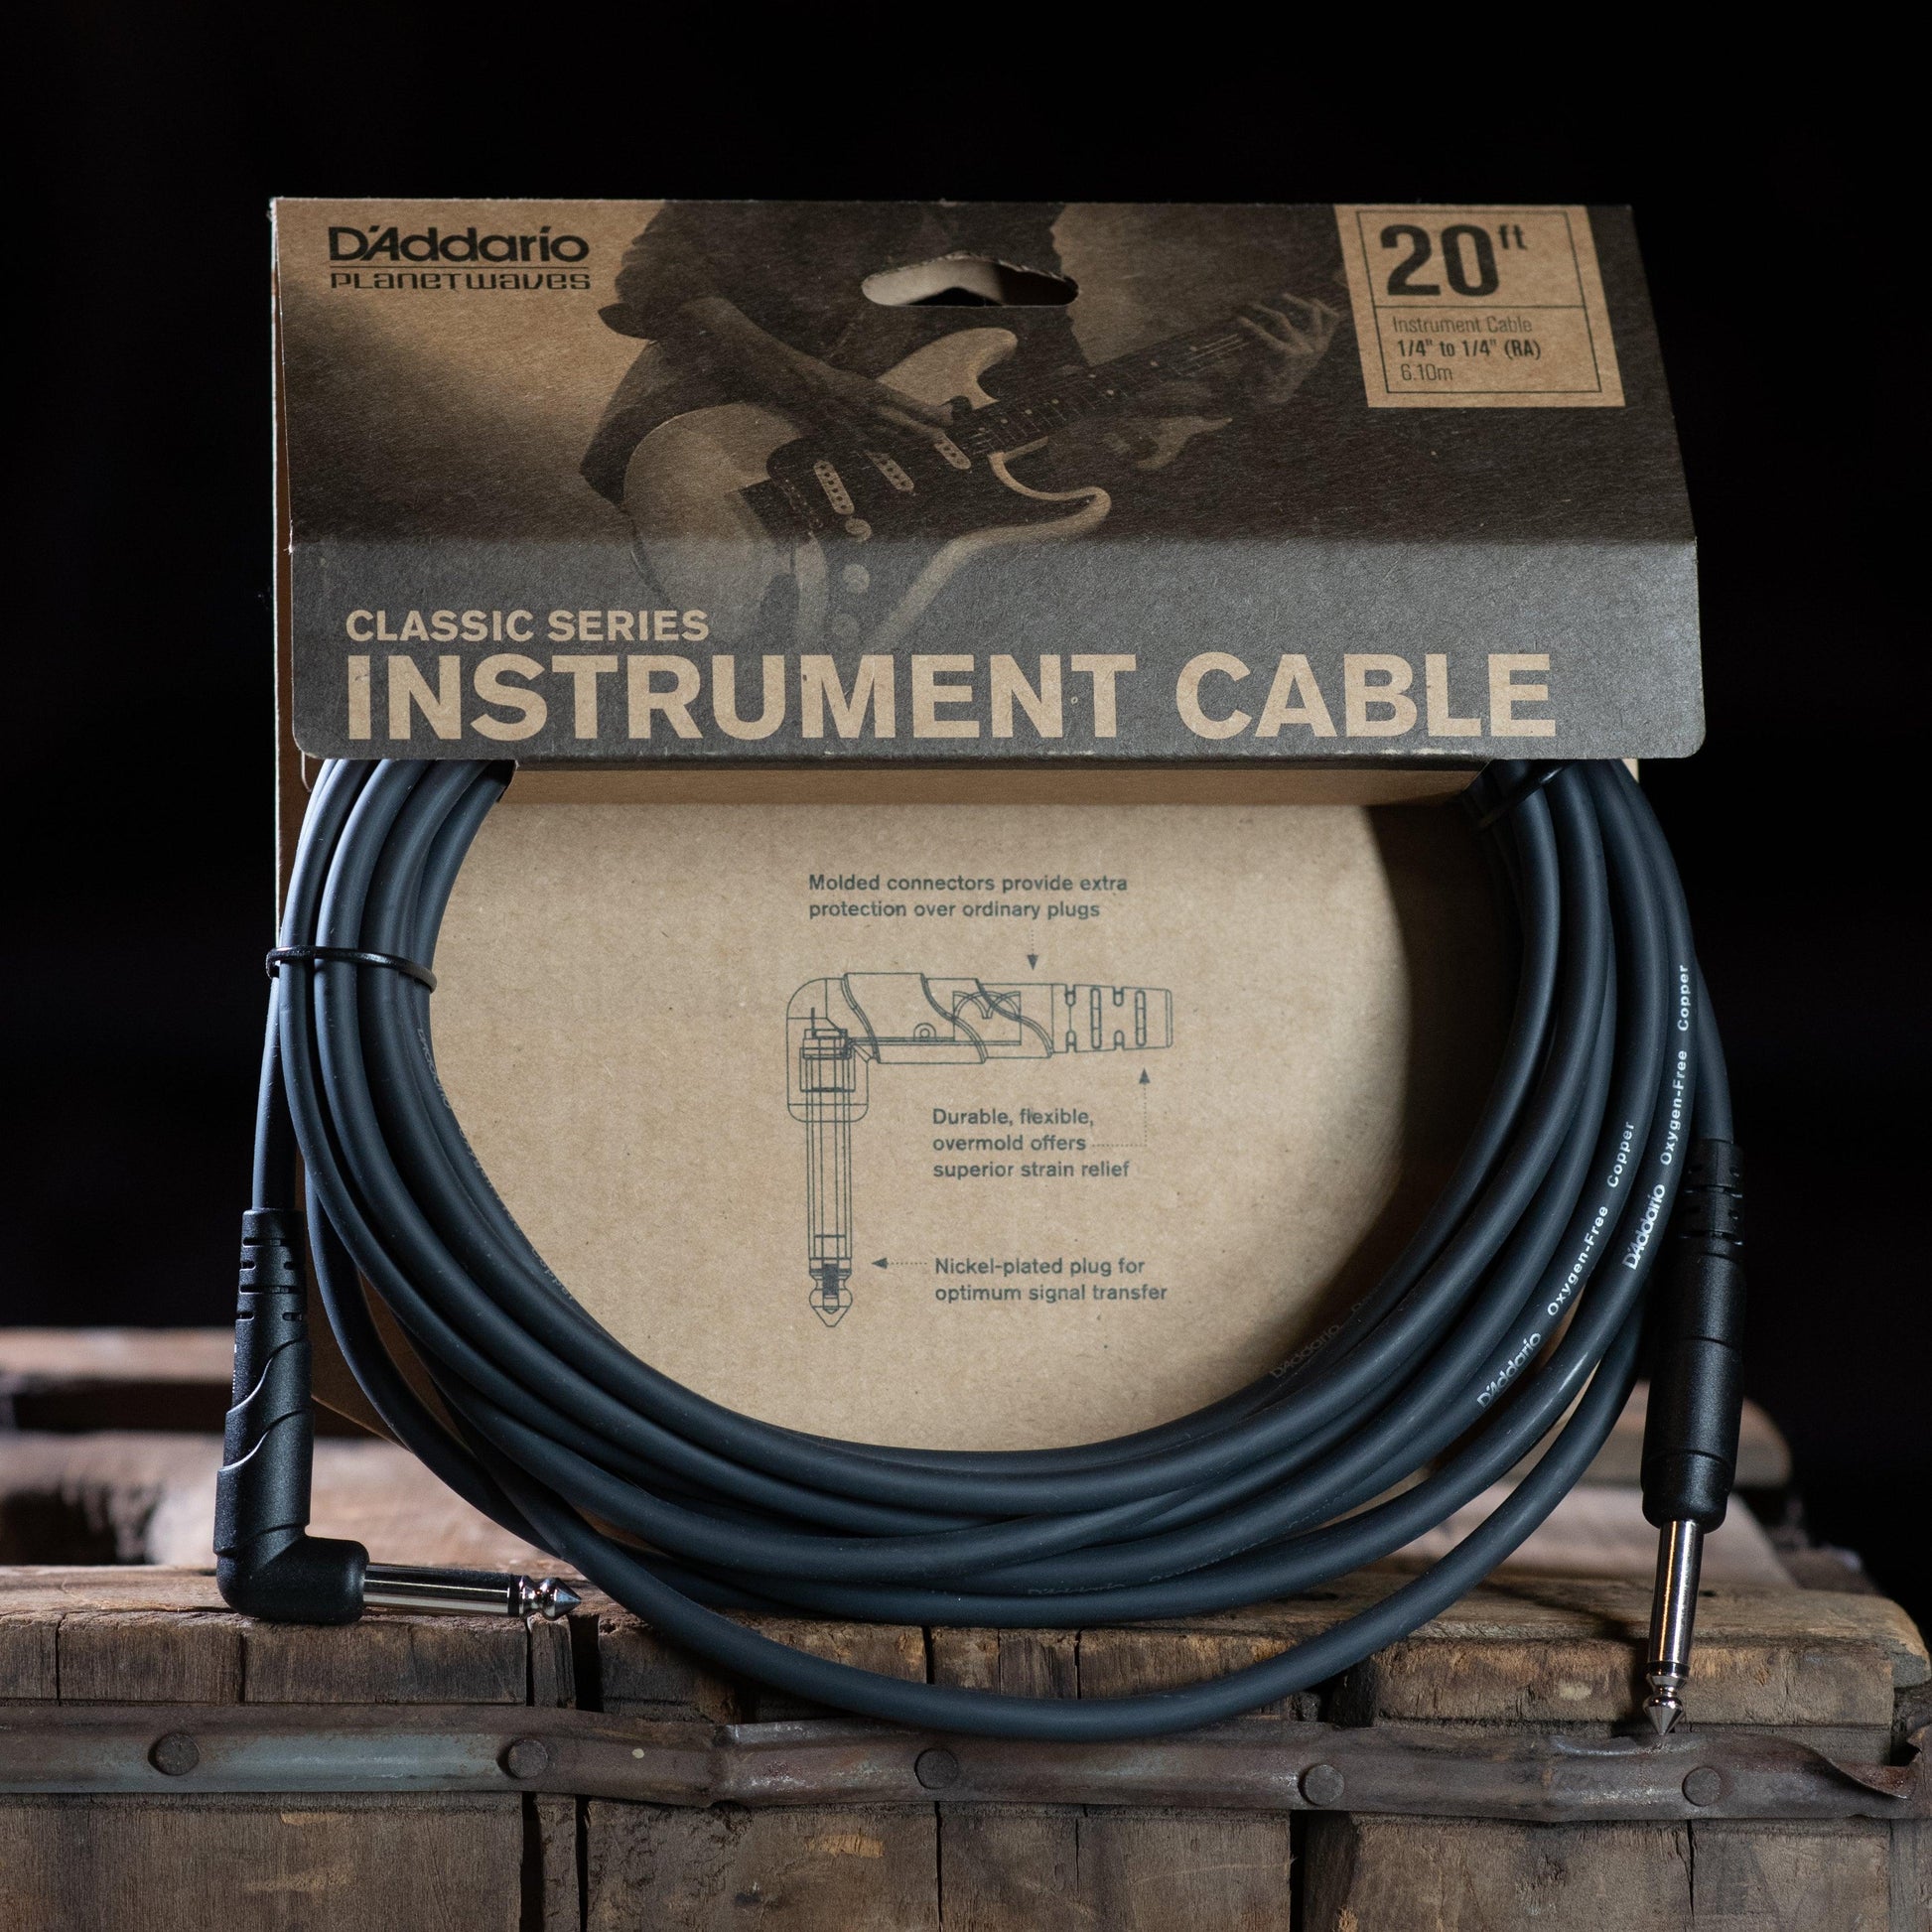 D'addario Classic Series Cable RA 20 ft. - Impulse Music Co.